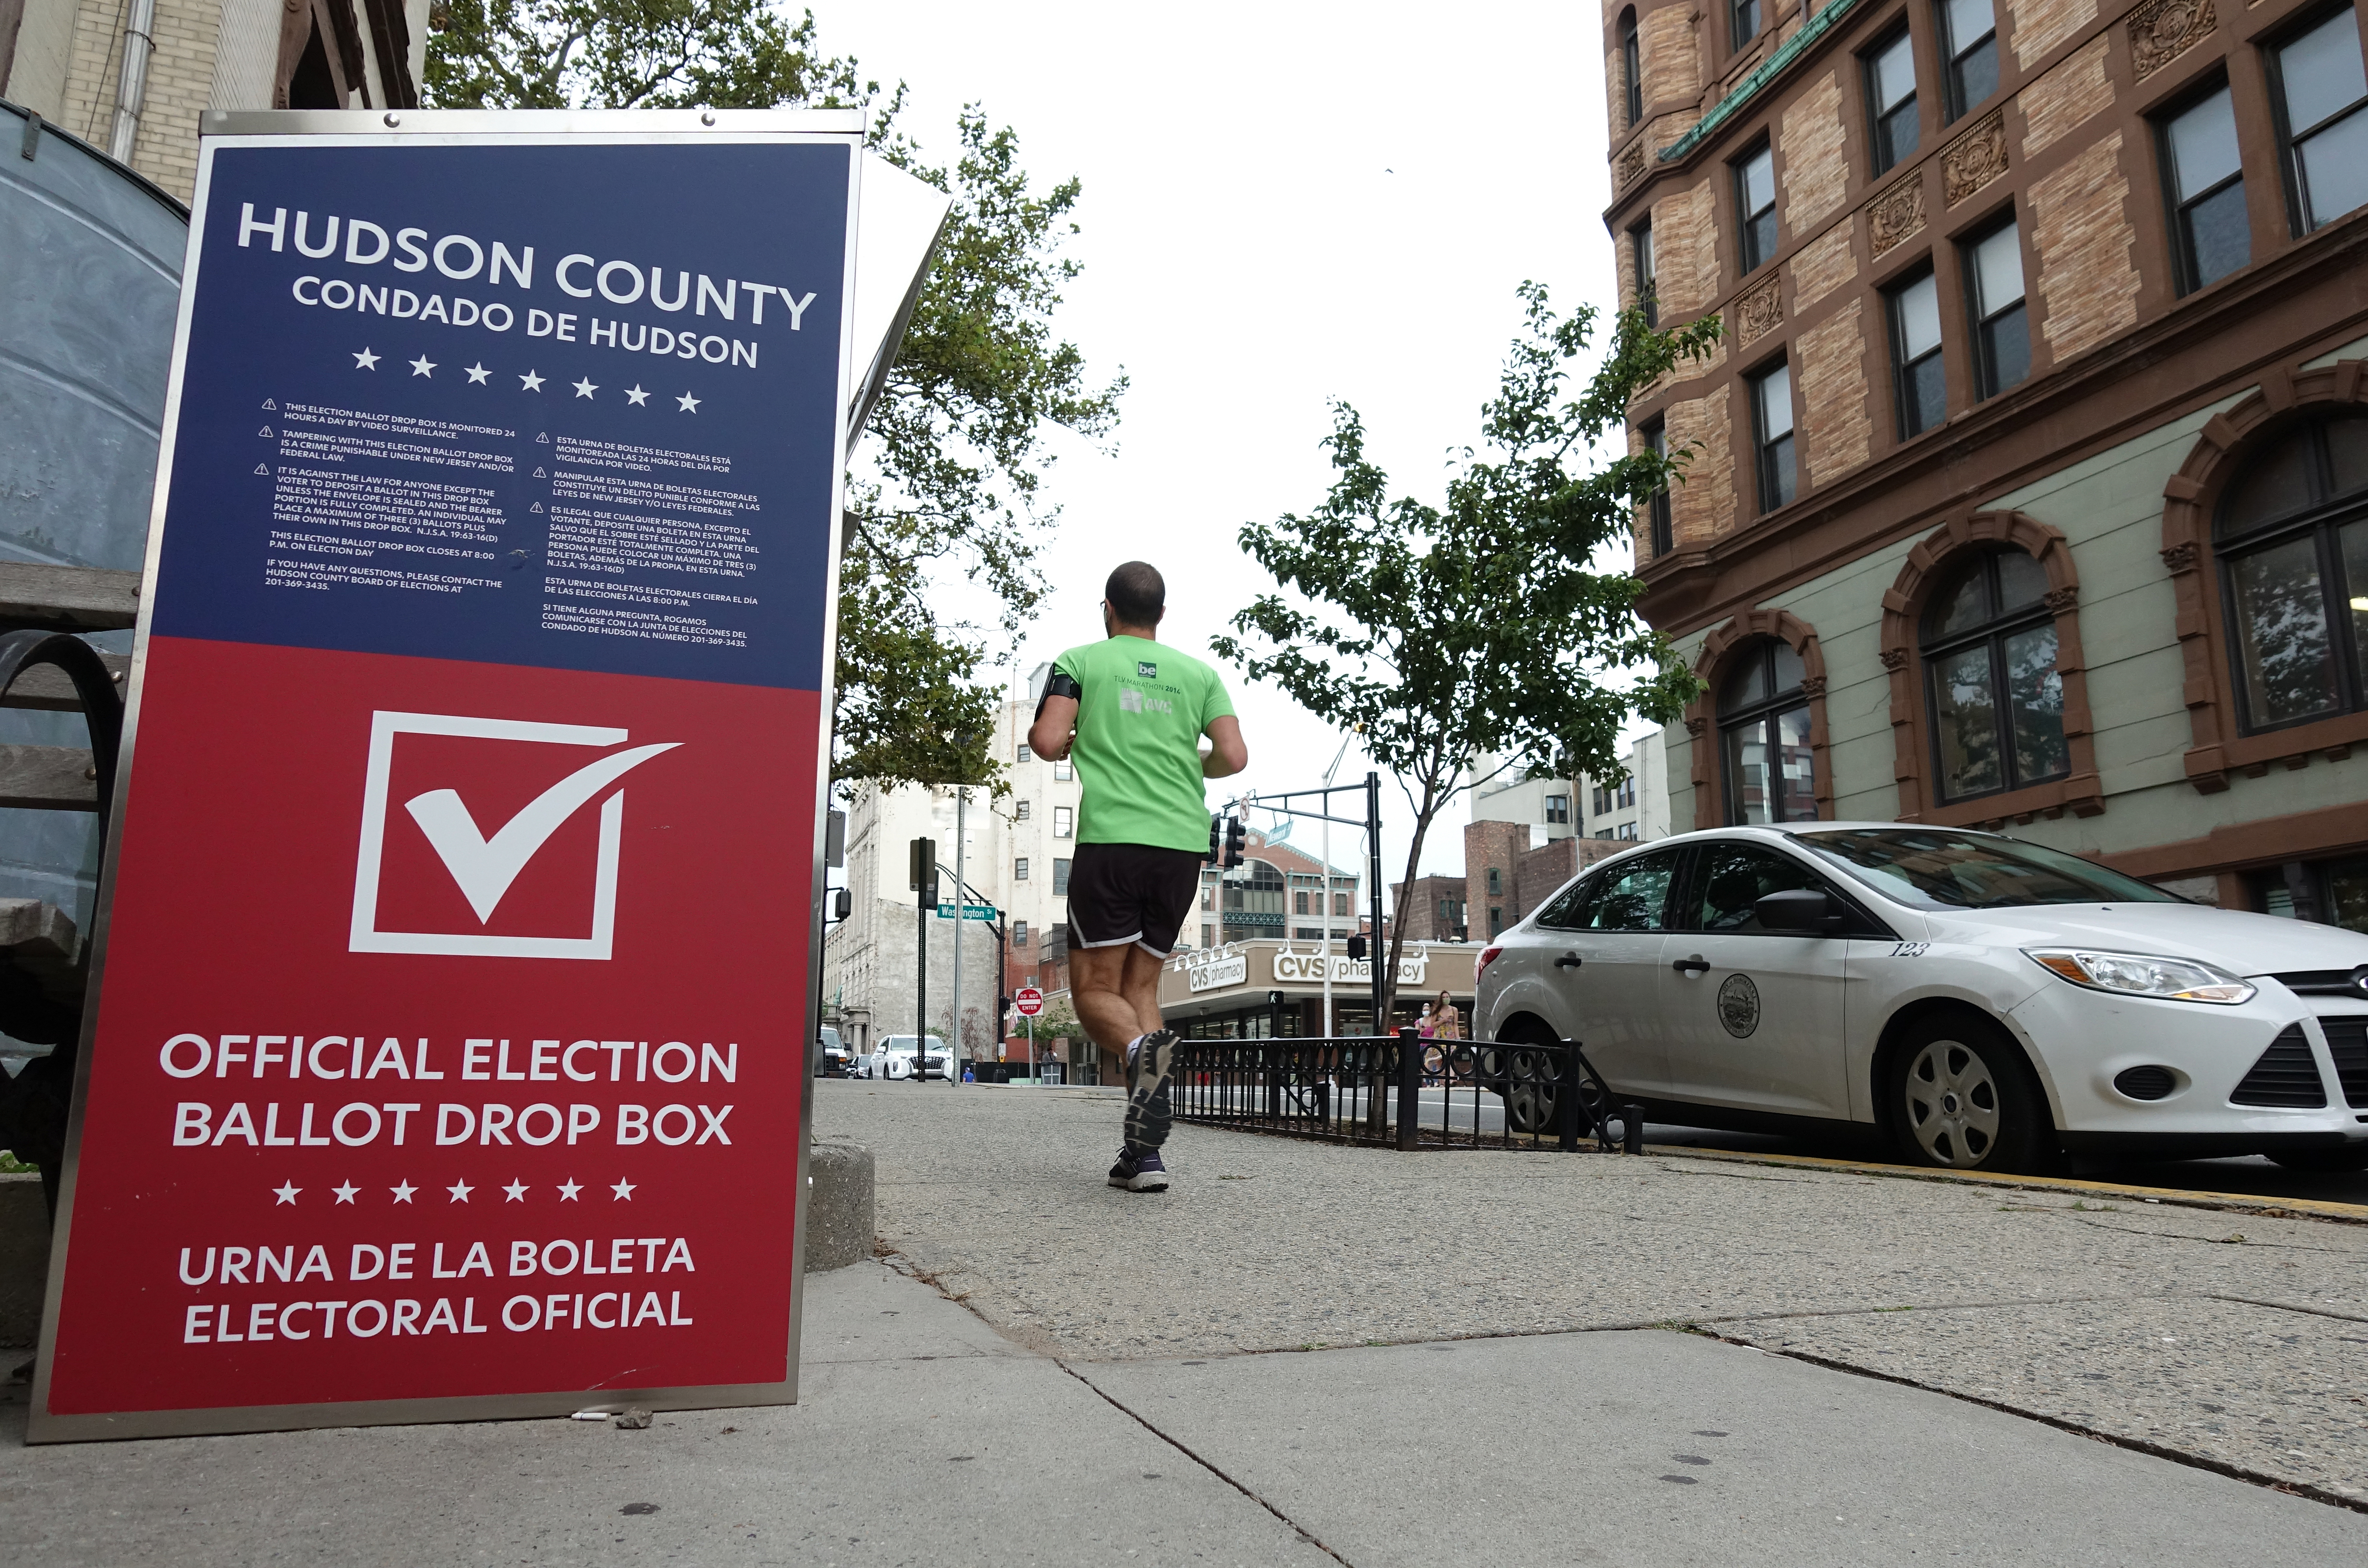 Election Ballot Drop Box in Hoboken, New Jersey.